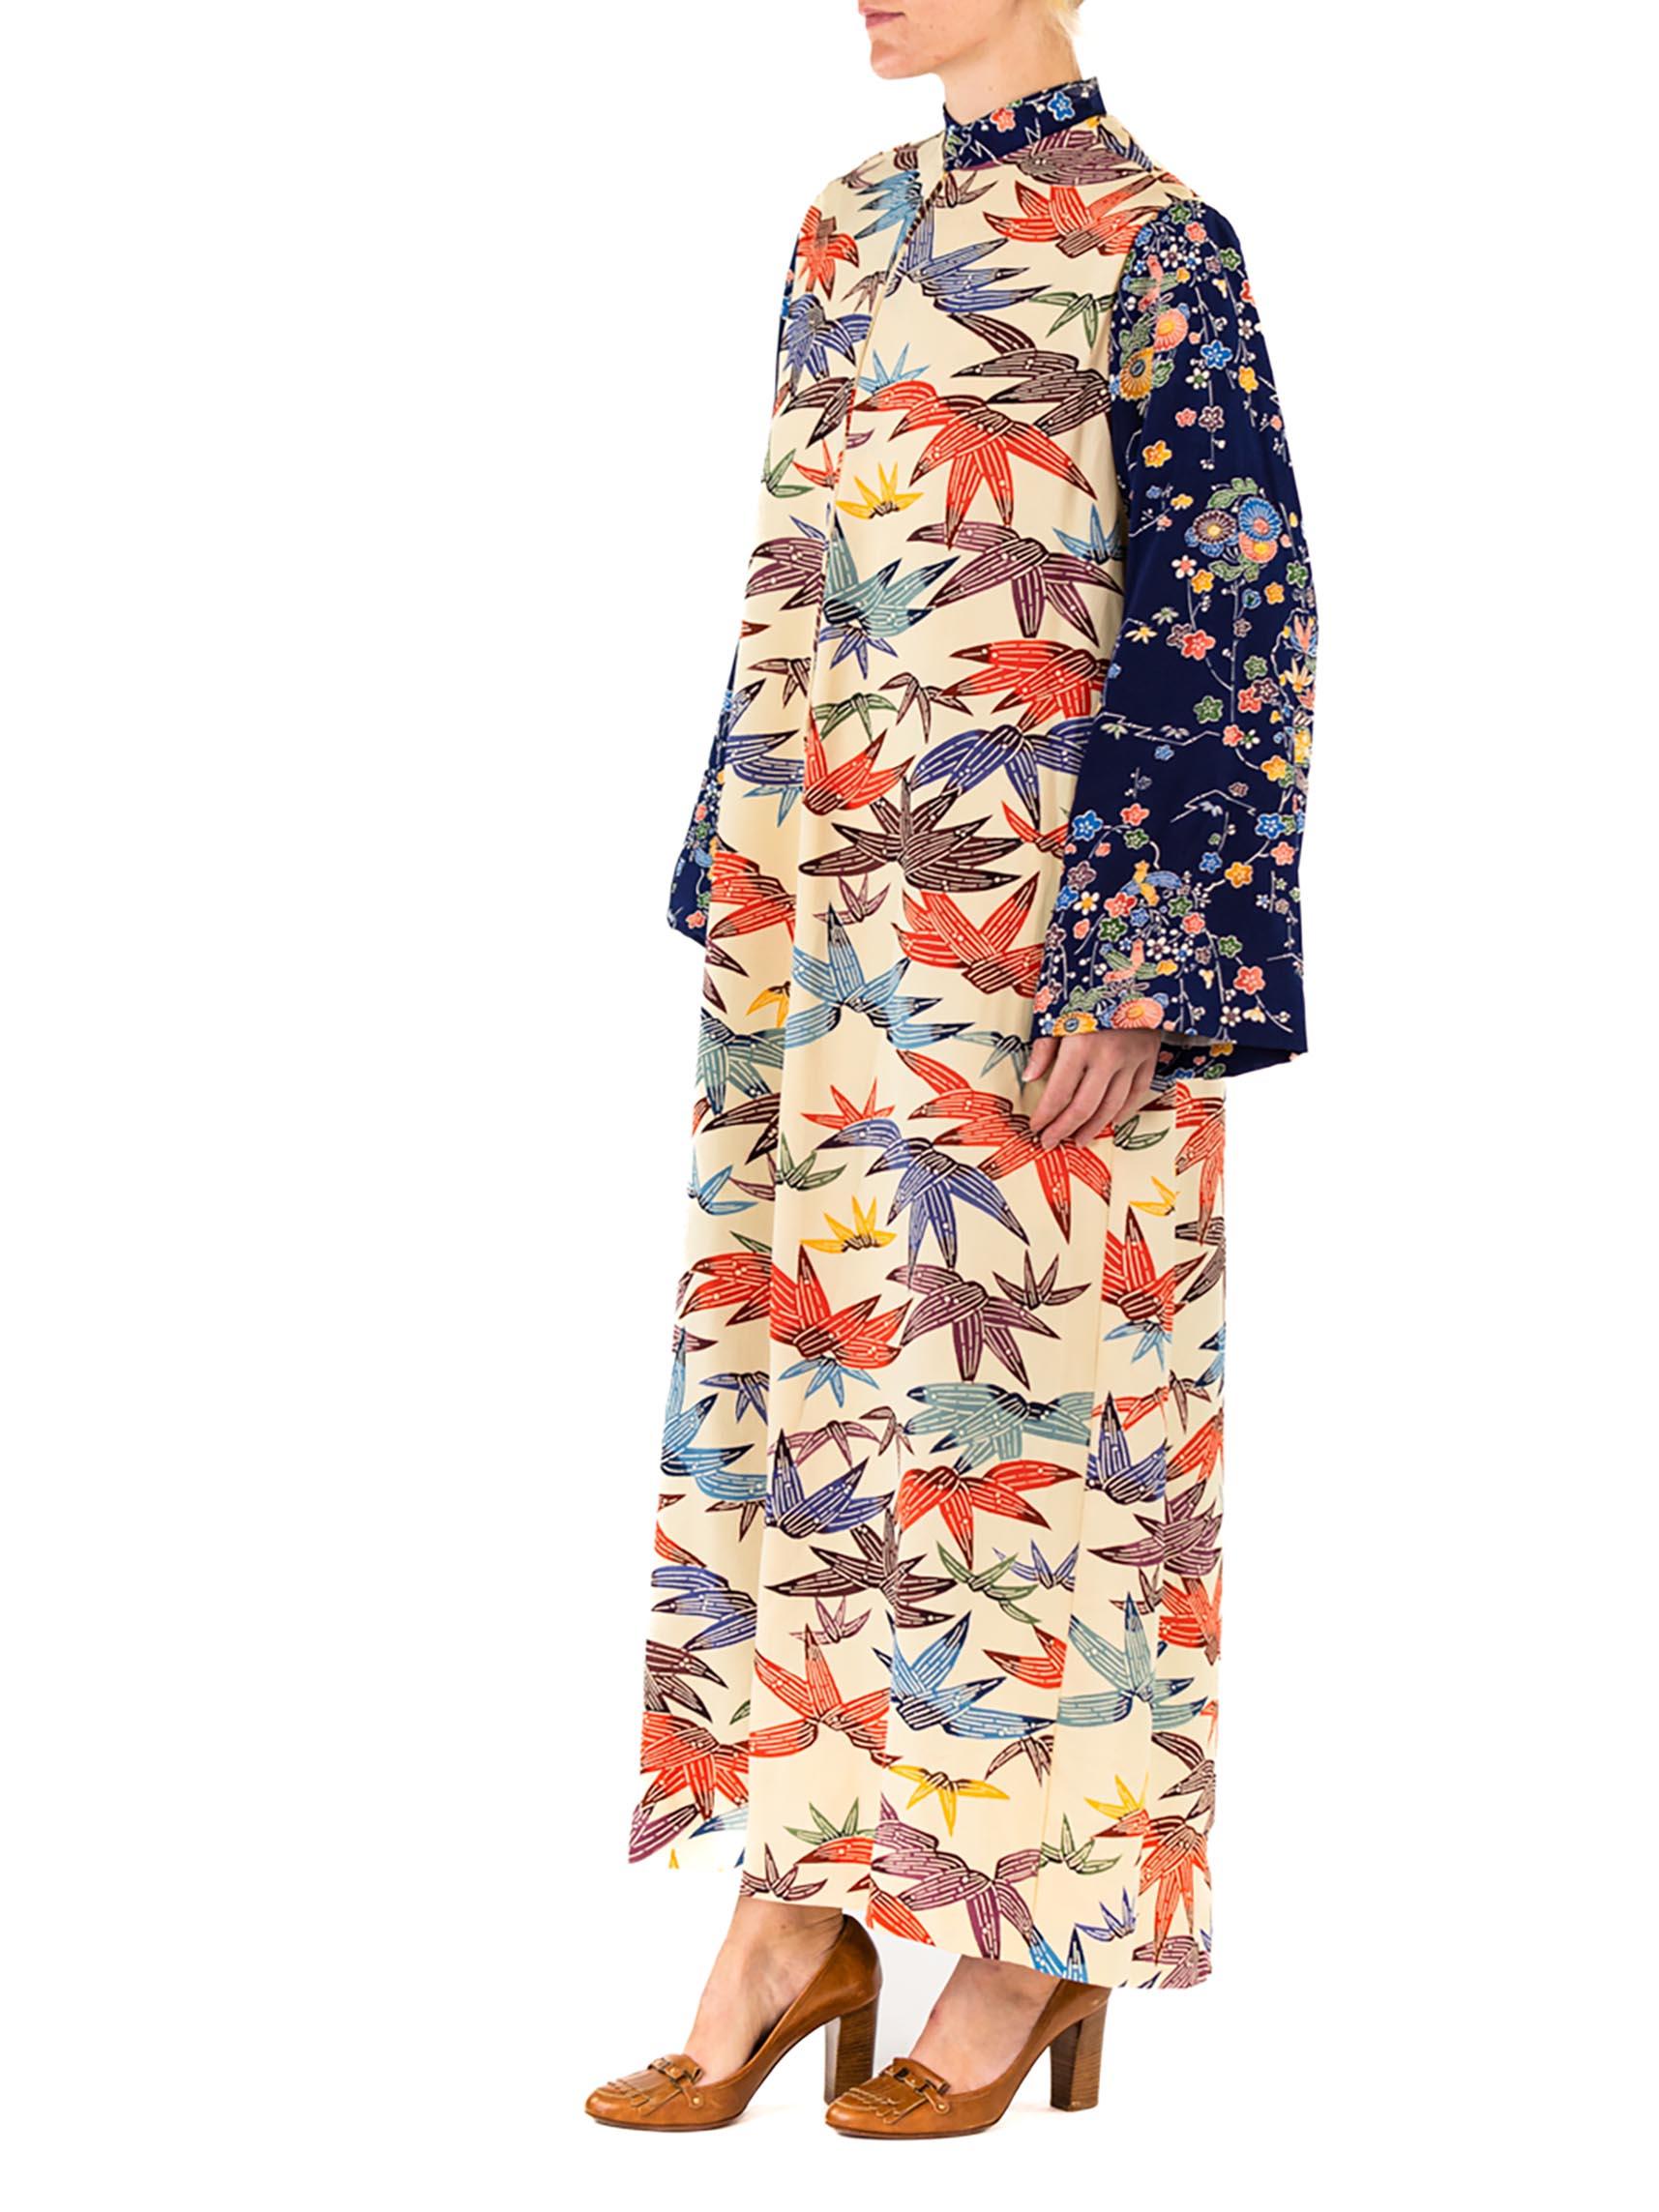 COLLECTION MORPHEW - Robe kimono multicolore en soie crème à manches bleu marine en vente 4